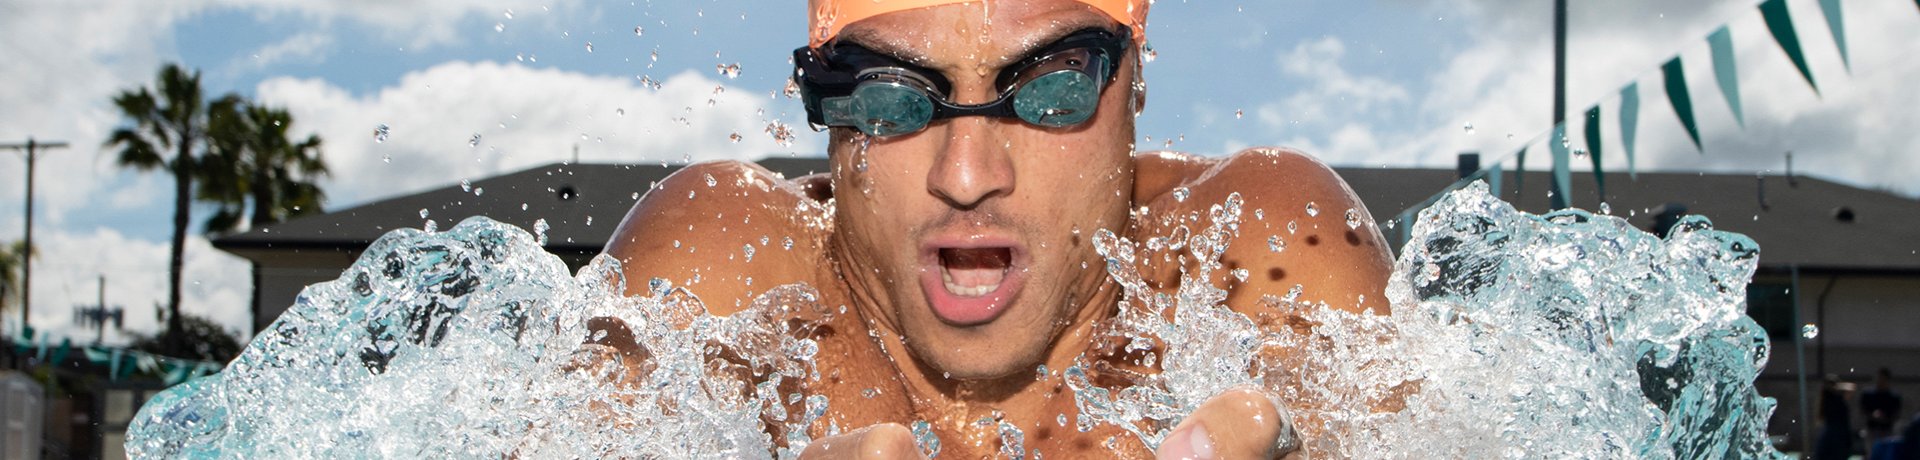 FORM swimming goggles